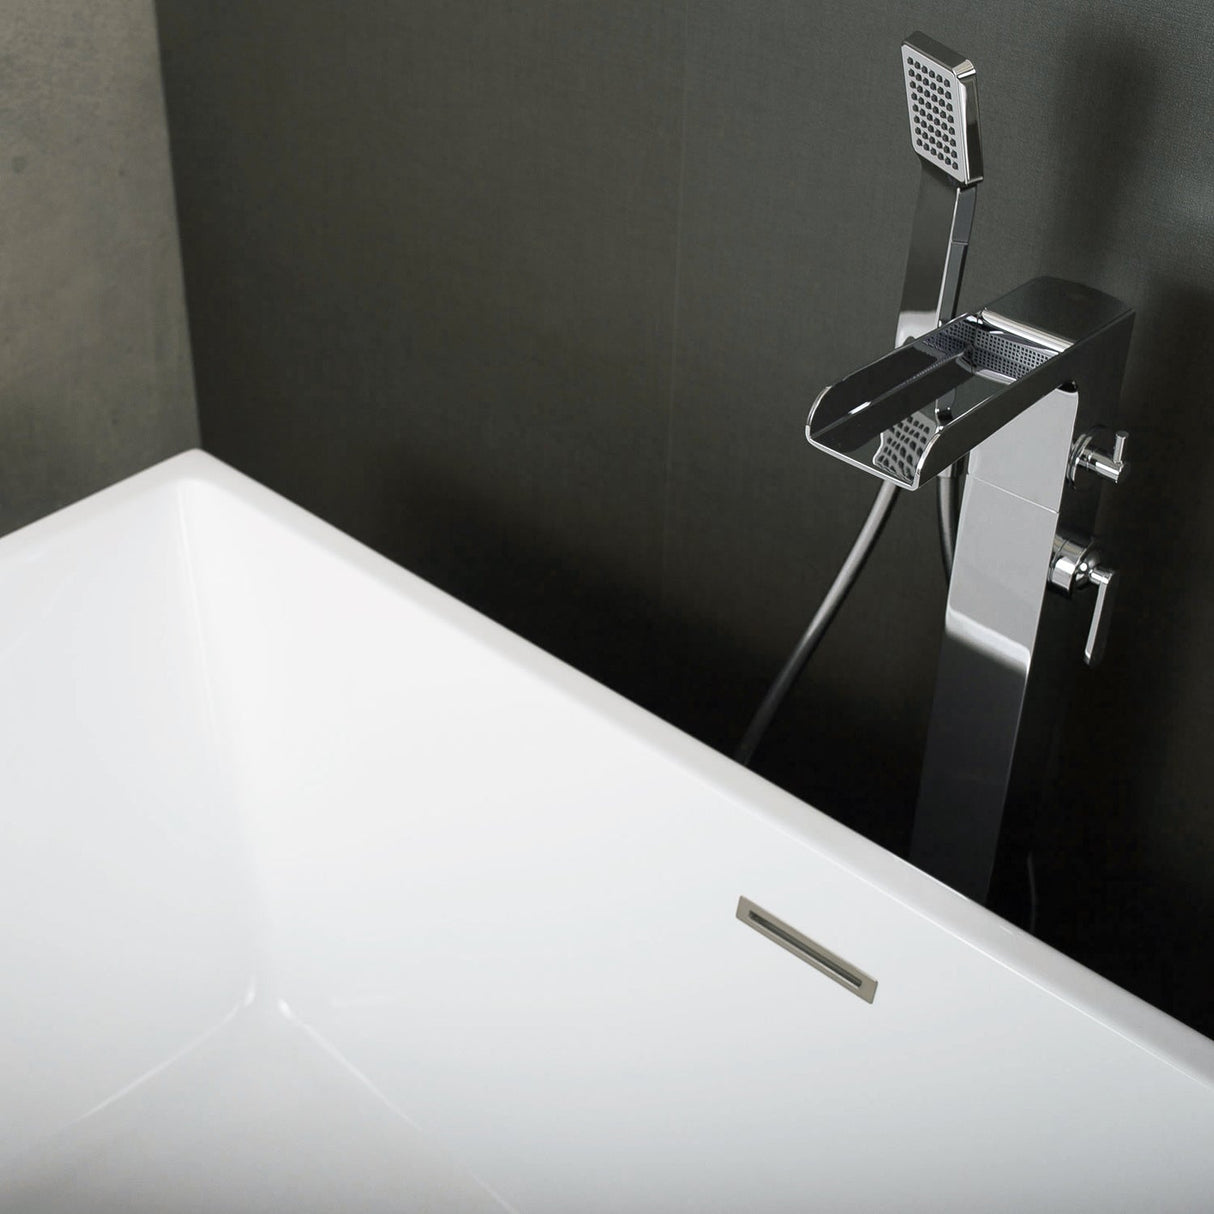 DAX Acrylic Square Freestanding Bathtub, White BT-8013